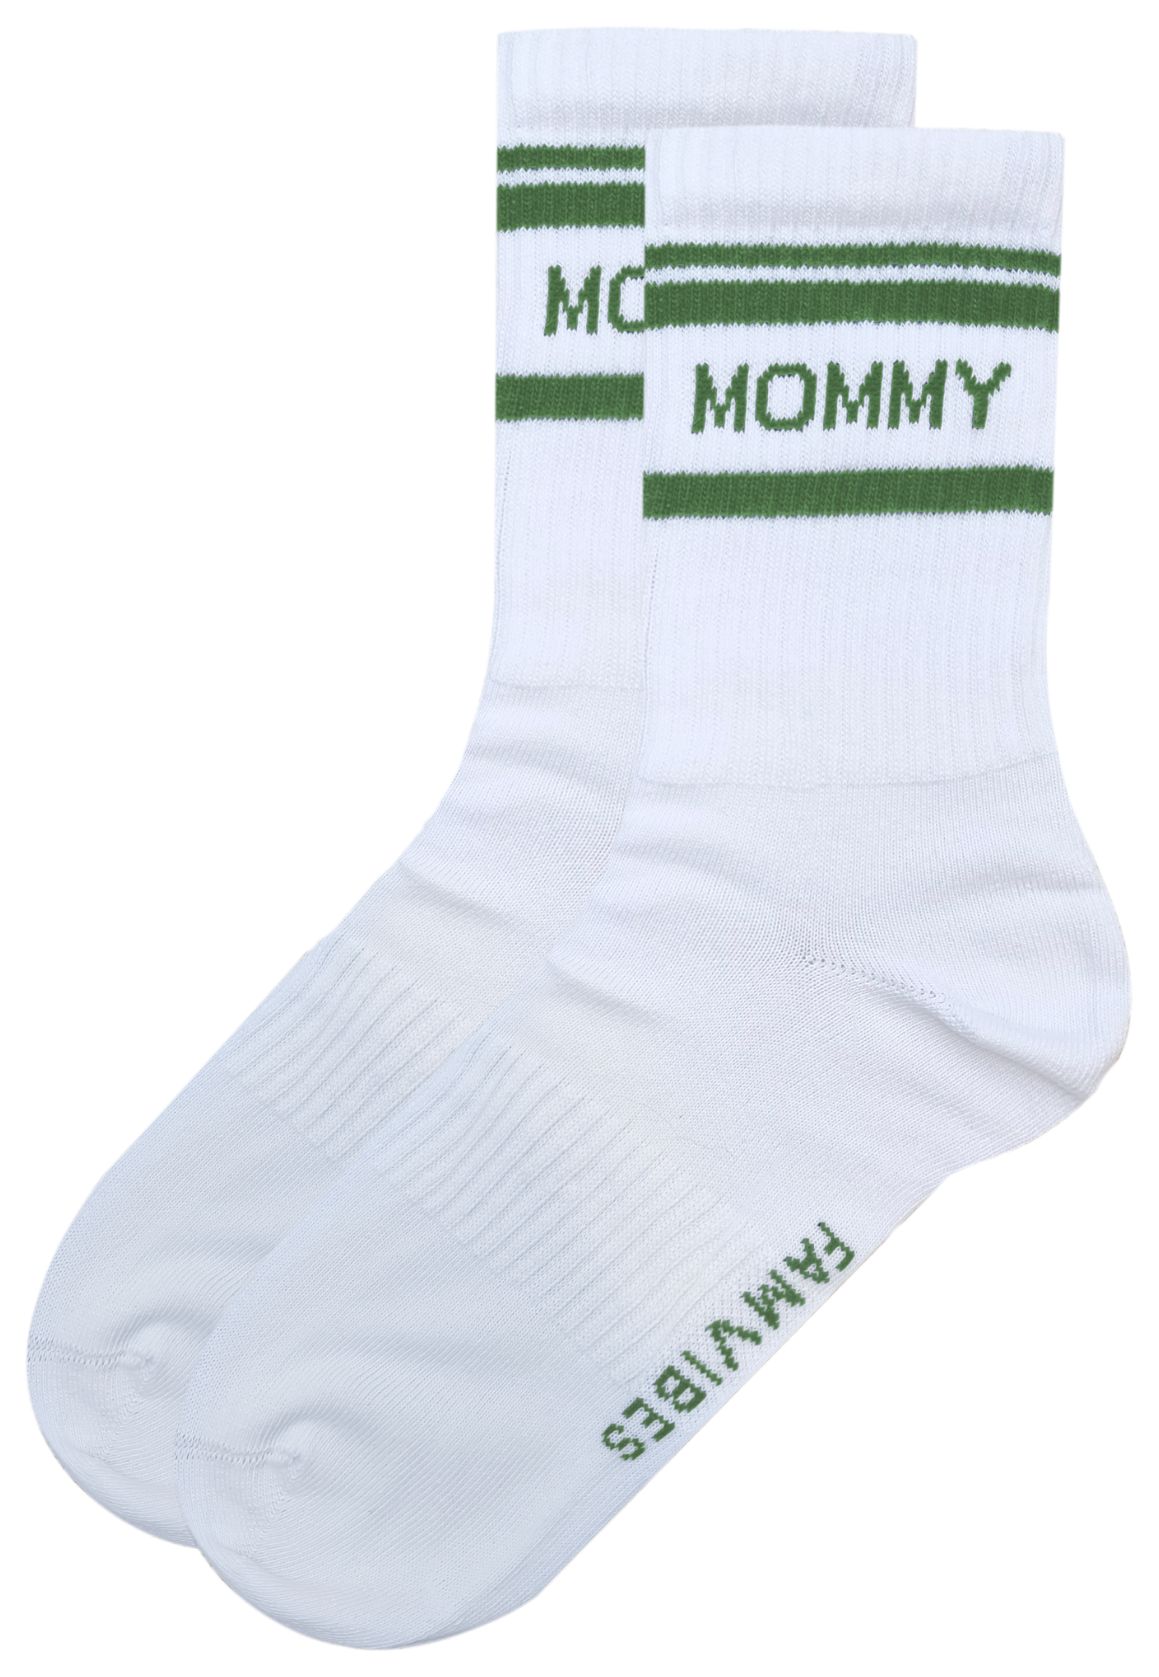 Famvibes Socken MOMMY Striped weiß/grün